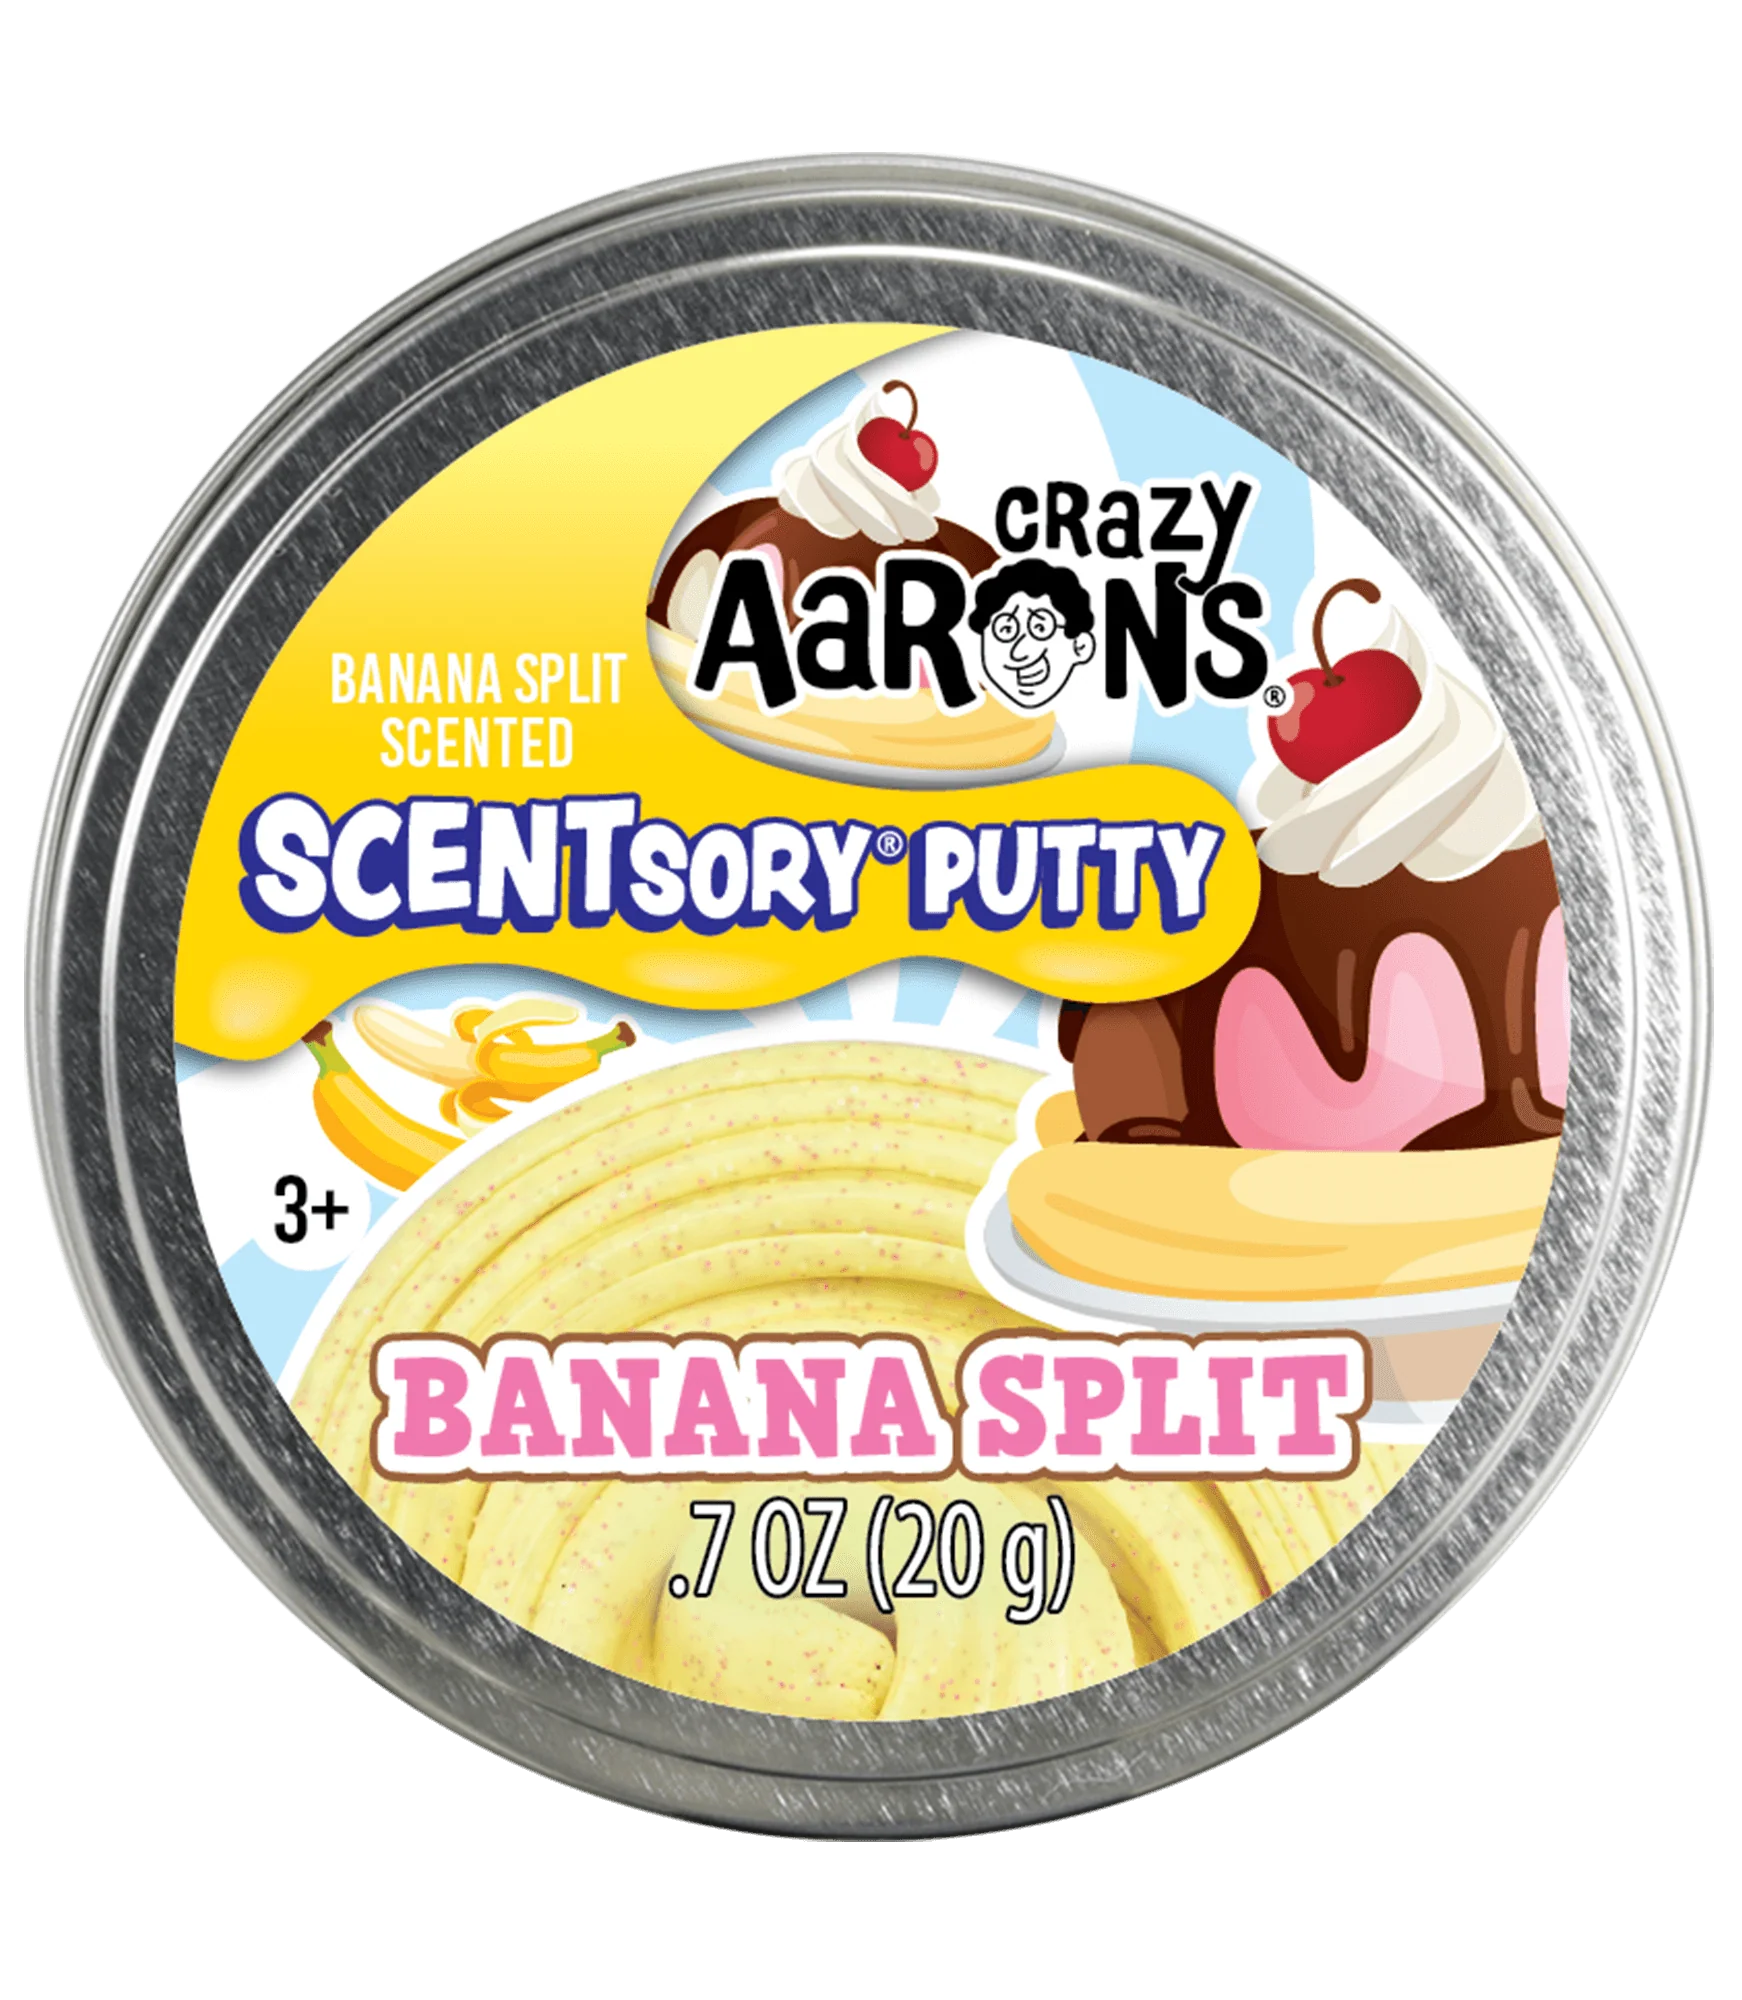 Scentsory Putty: Banana Split by Crazy Aaron’s #SCN-BS055